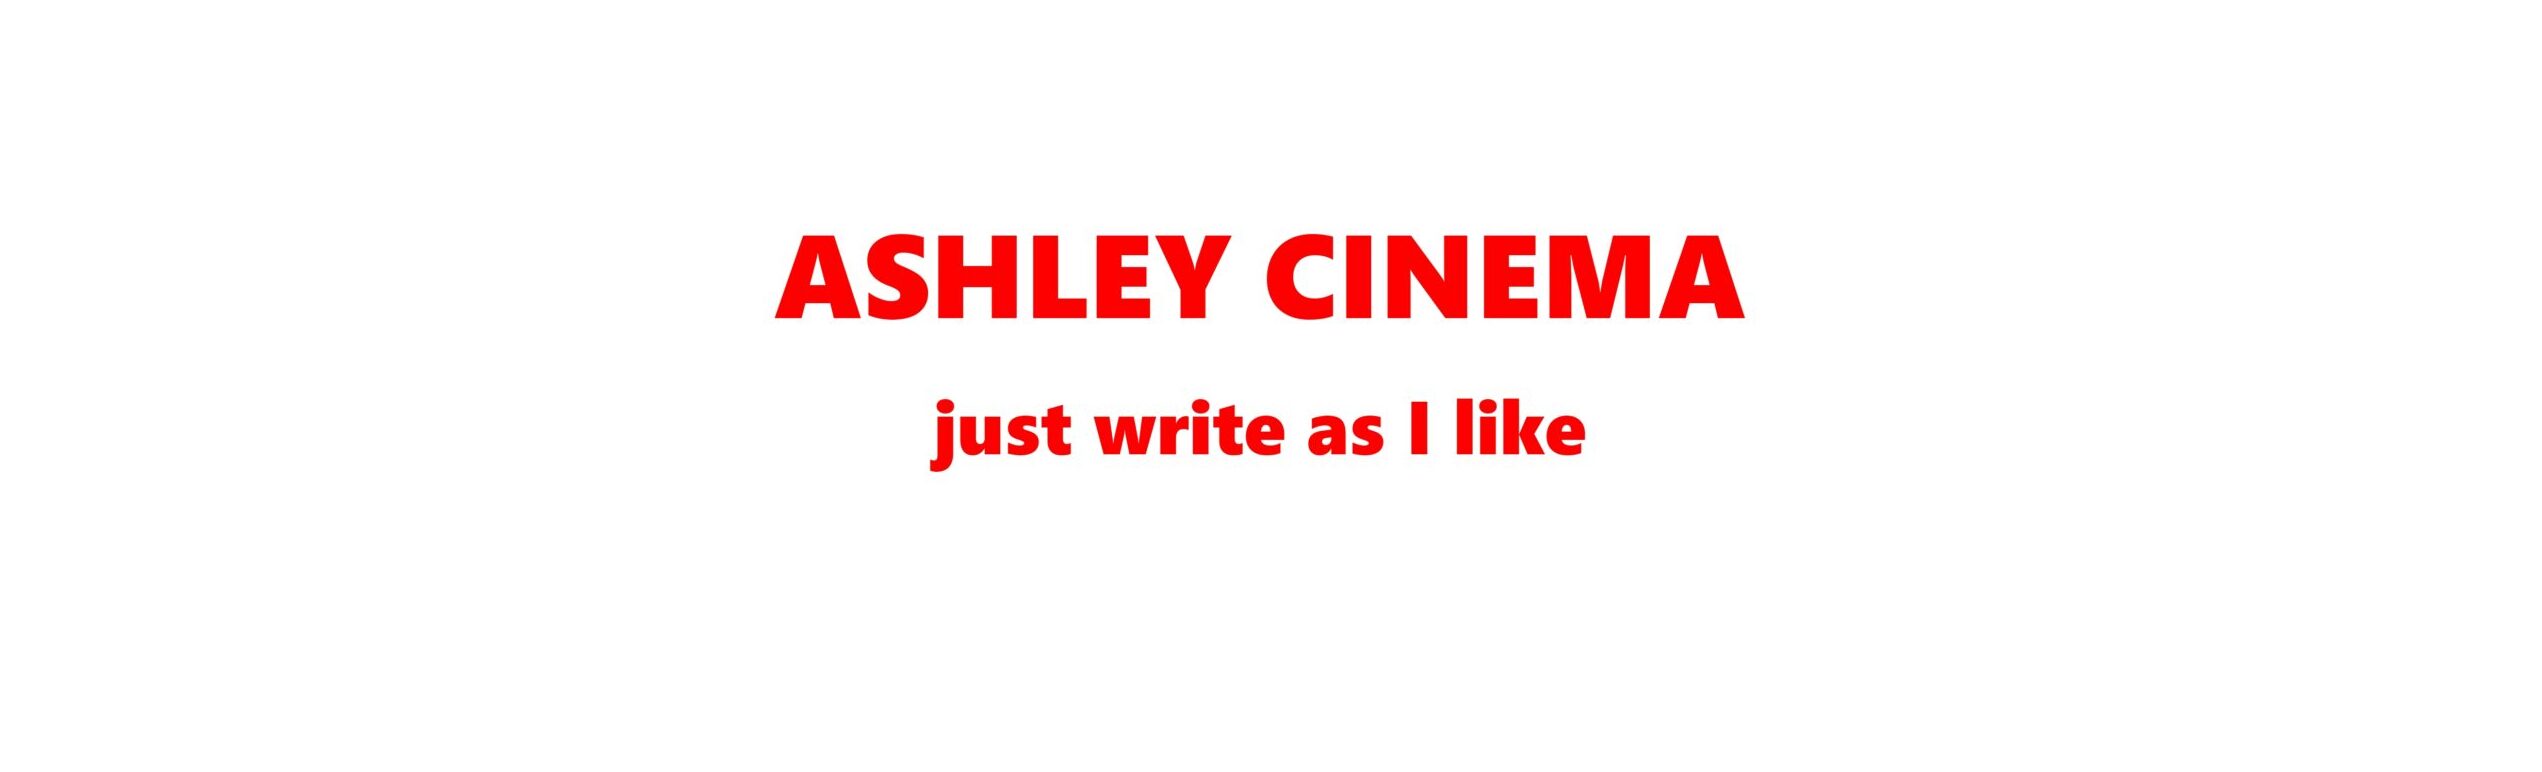 ASHLEY CINEMA